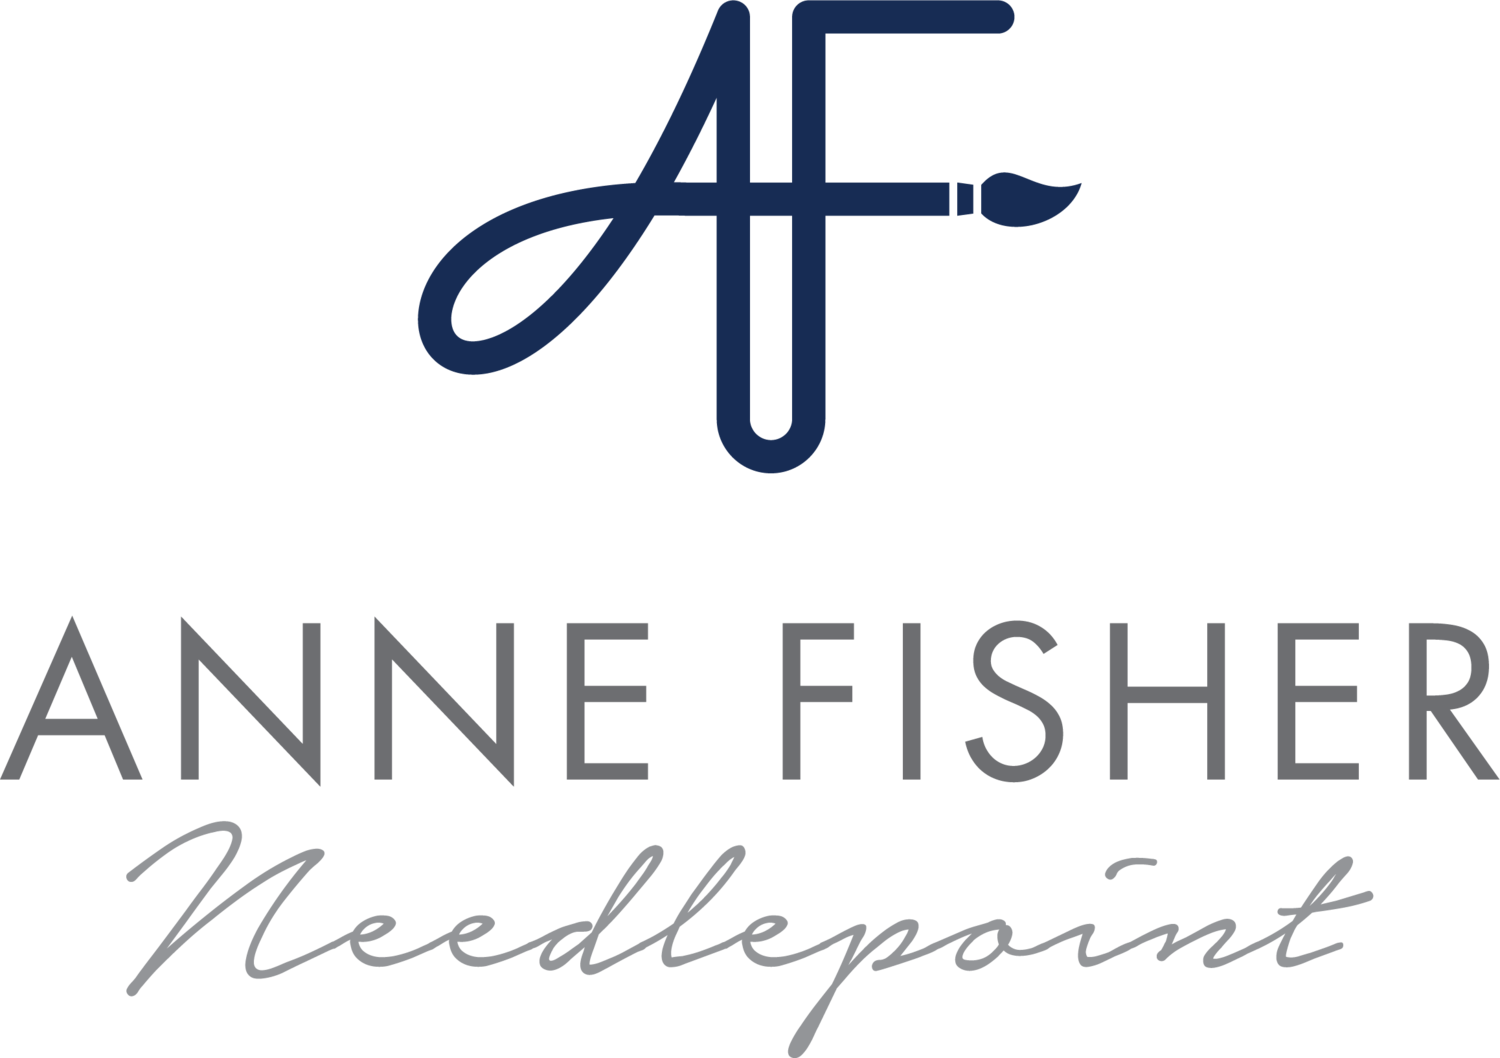 Anne Fisher Needlepoint, LLC